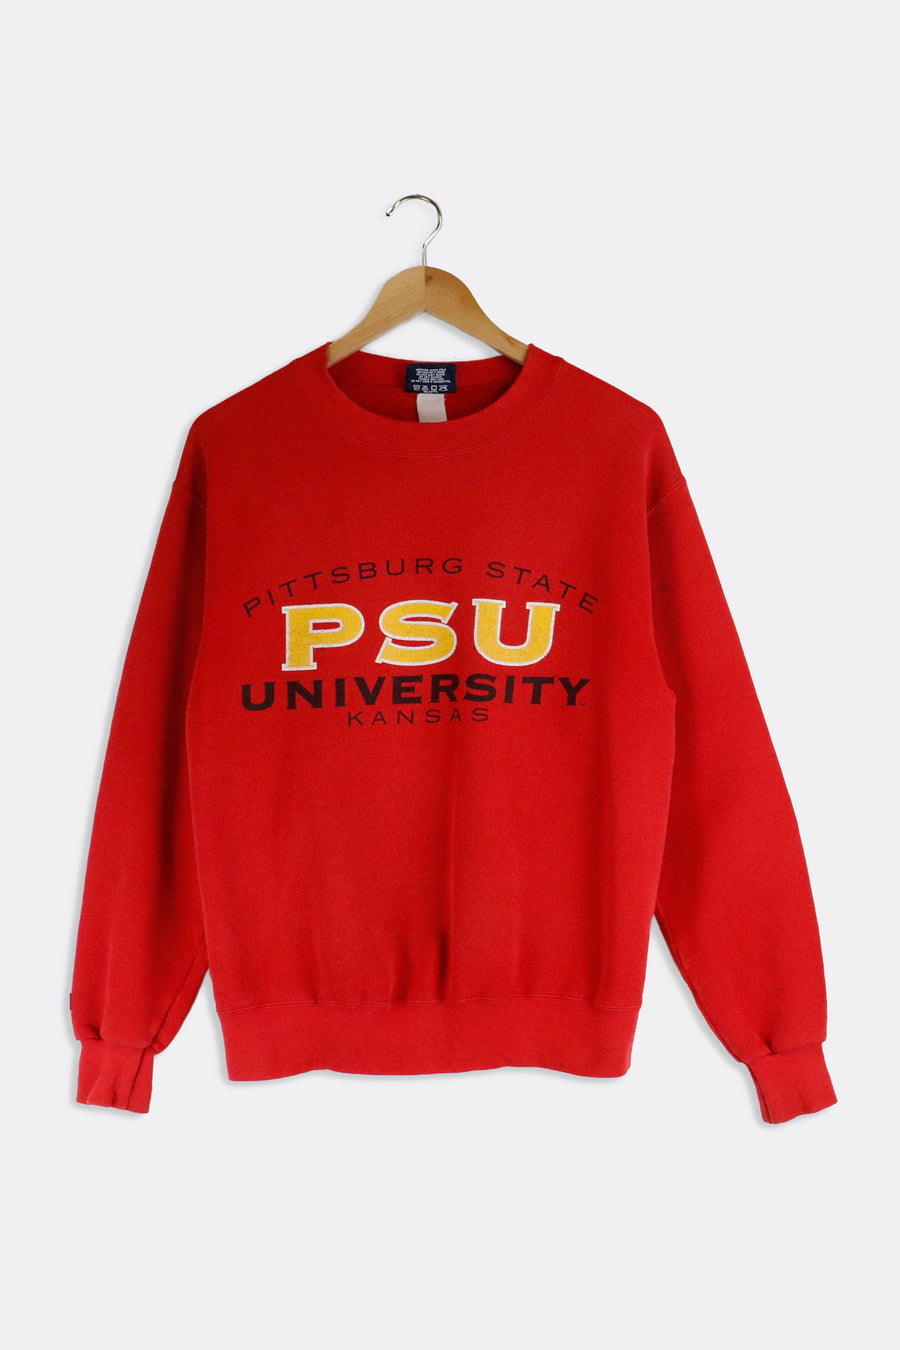 Vintage Pittsburg State University University Kansas Sweatshirt Sz S